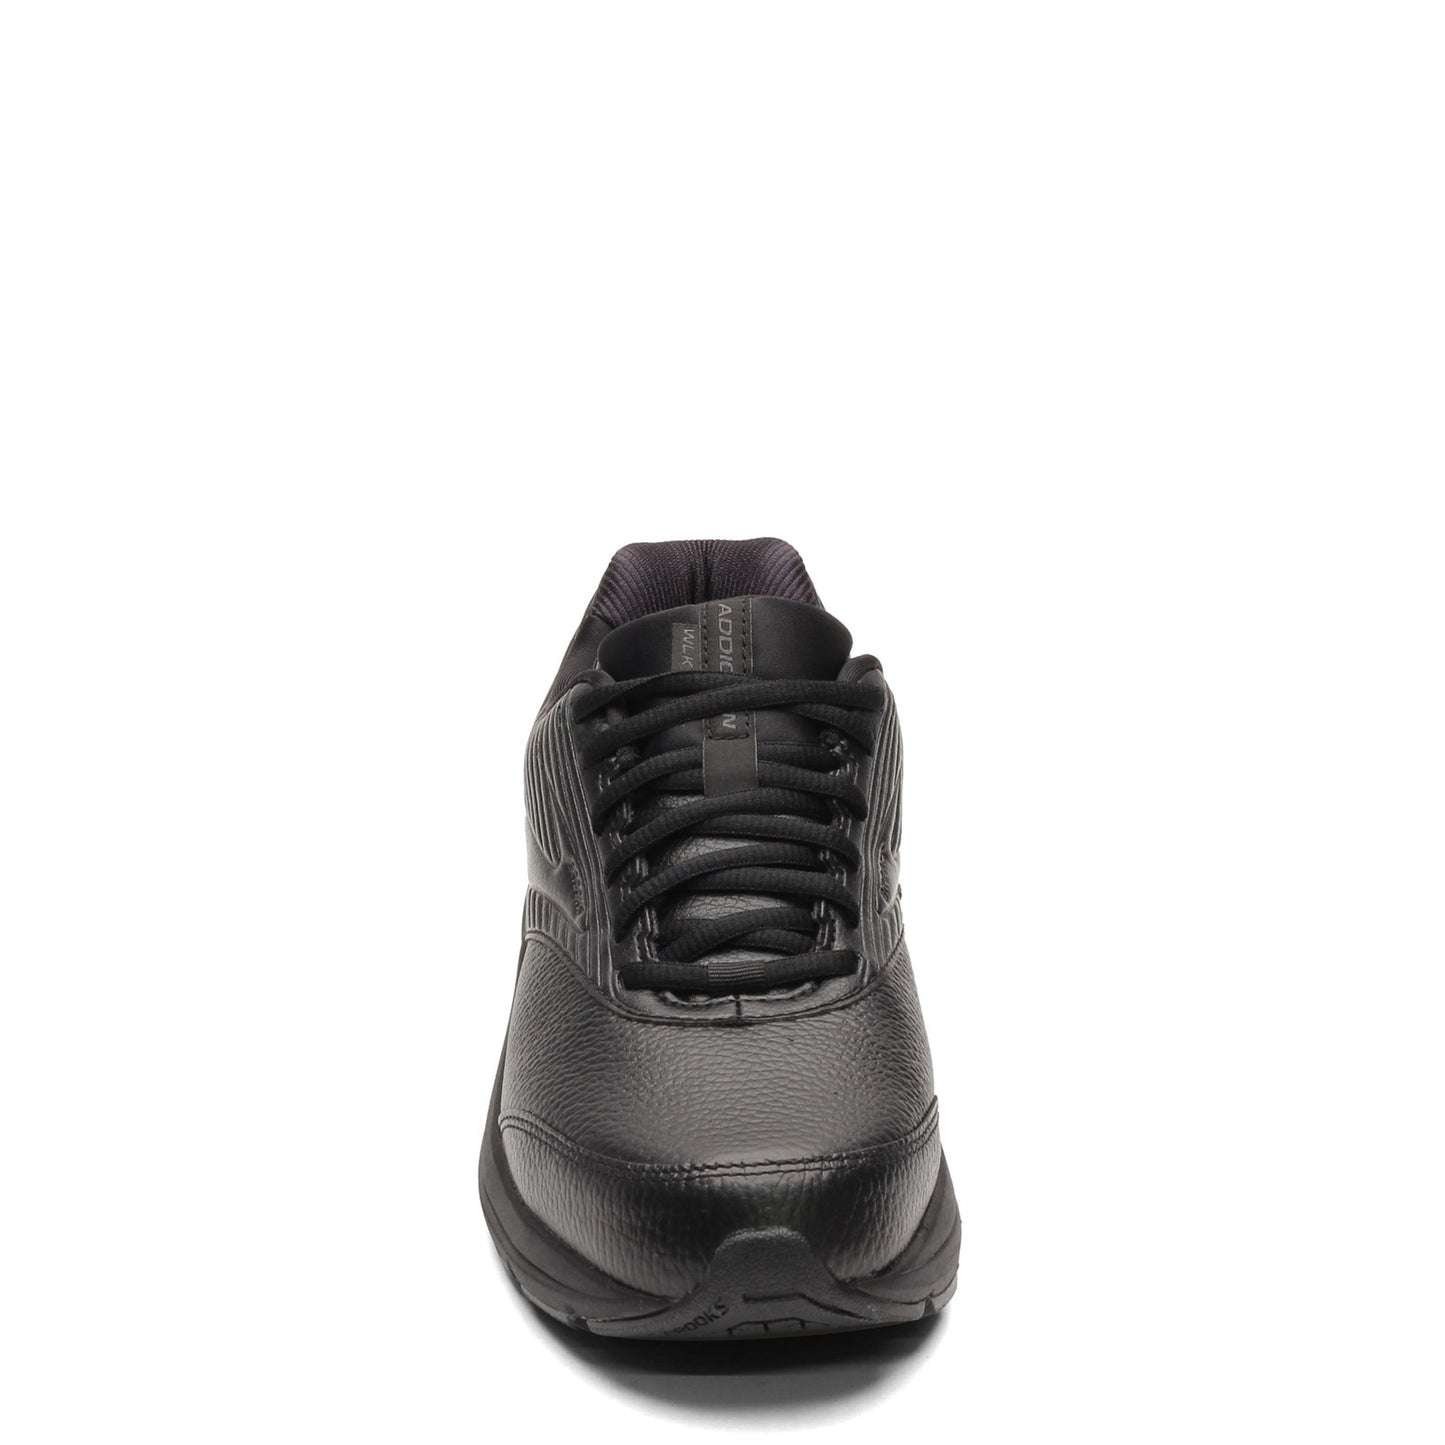 Peltz Shoes  Men's Brooks Addiction Walker 2 Walking Shoe - Extra Wide Black/Black 110318 4E 072